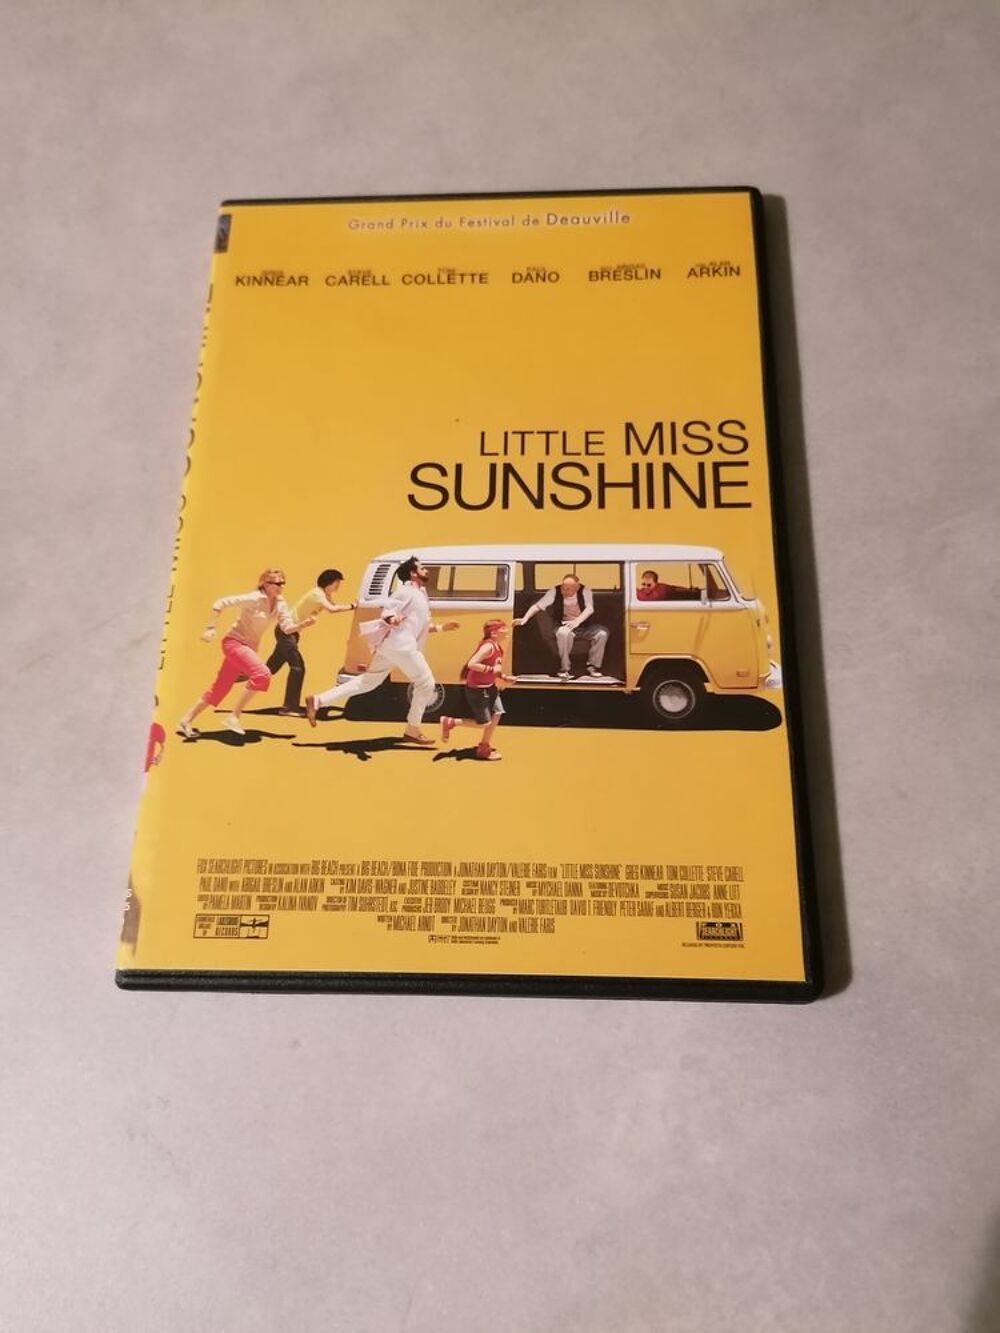 2 DVD My week with Marilyn et Little miss sunshine DVD et blu-ray